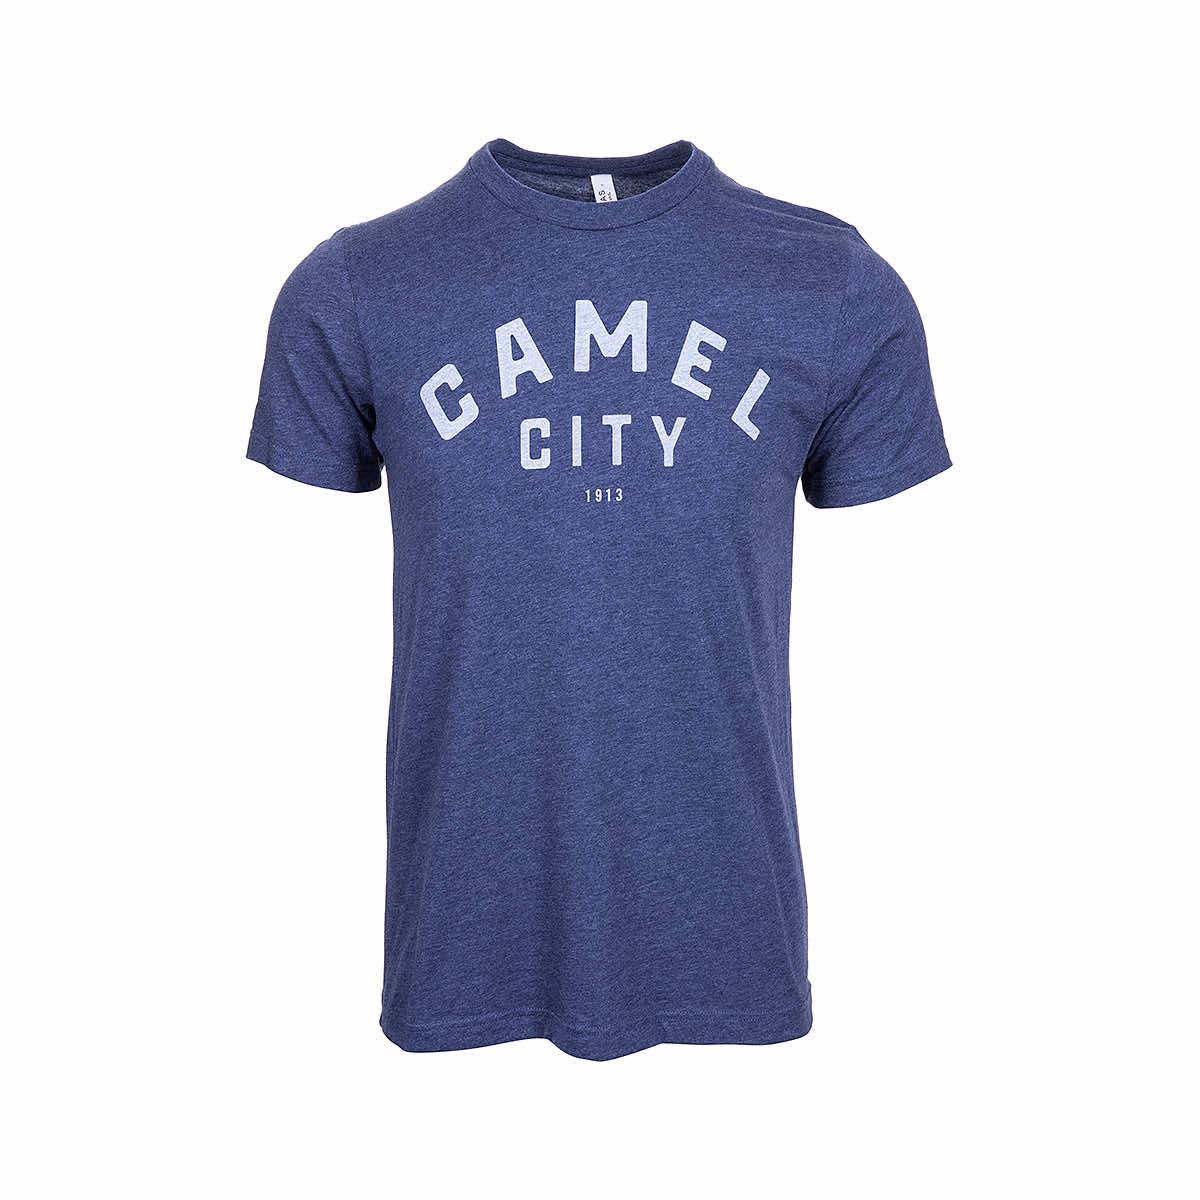  Winston- Salem Camel City Short Sleeve T- Shirt